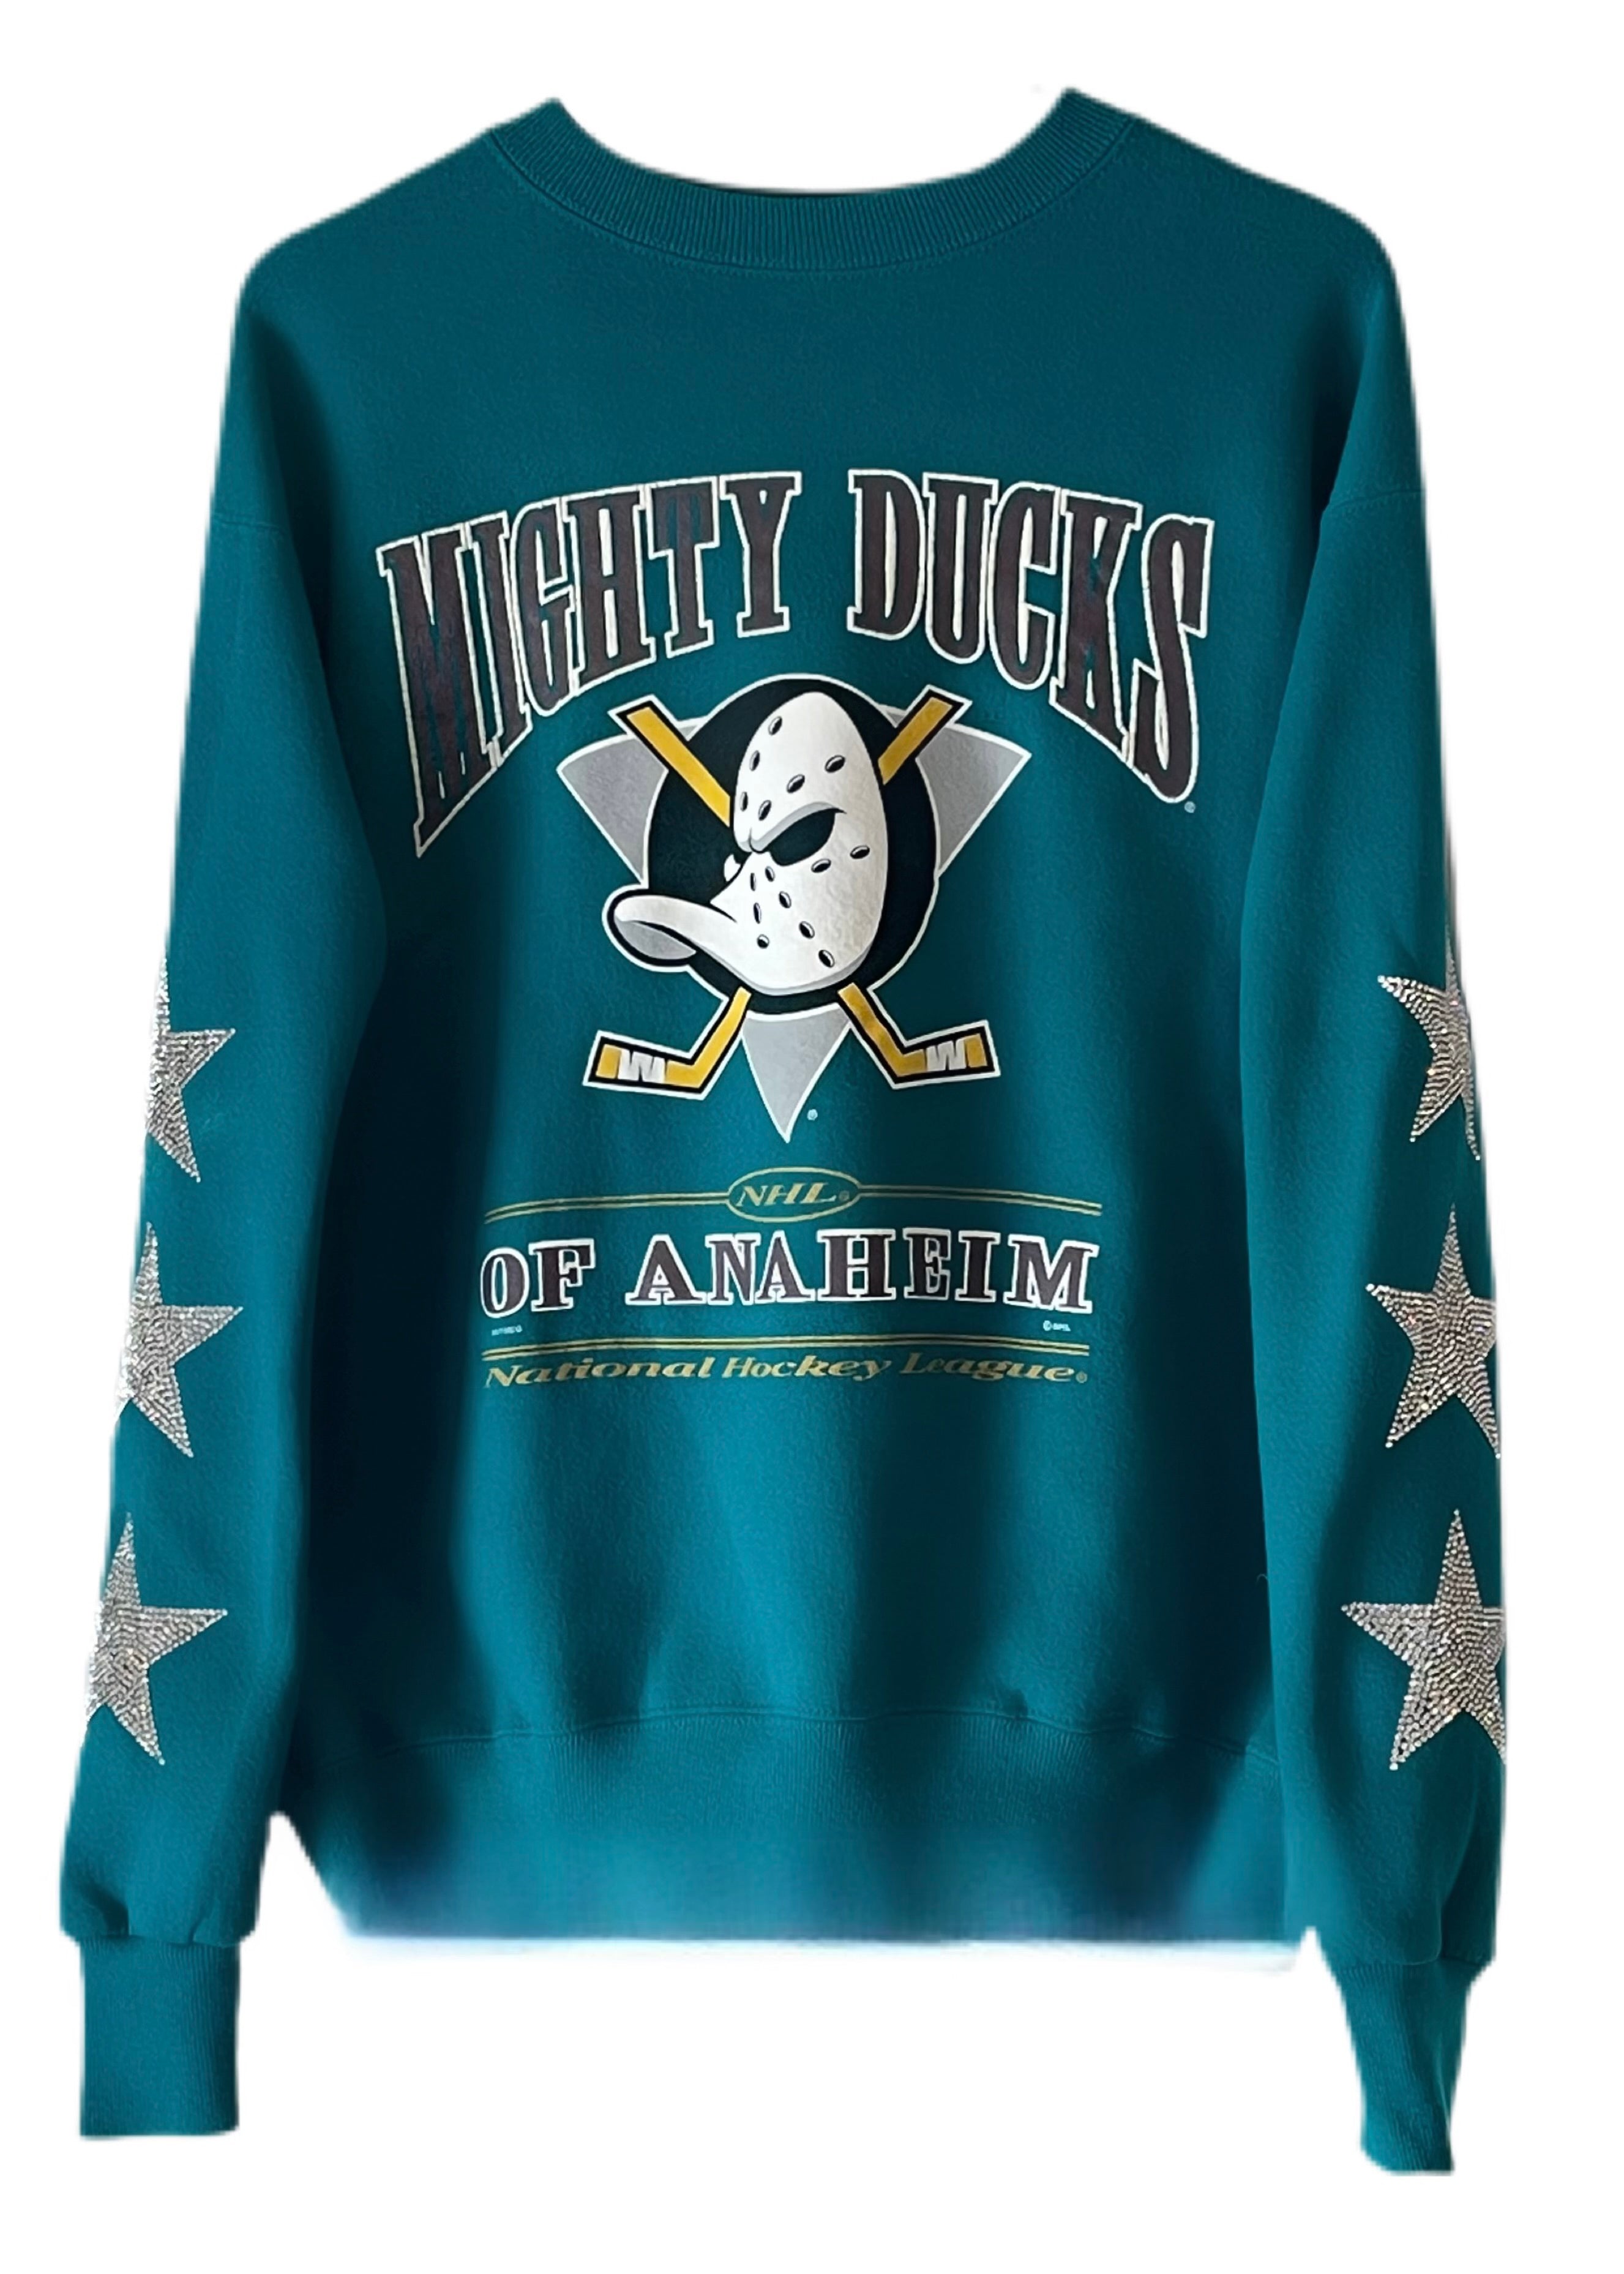 VTG 90s Headline Stars The Mighty Ducks Hockey Star Knit Multicolor Sweater  6